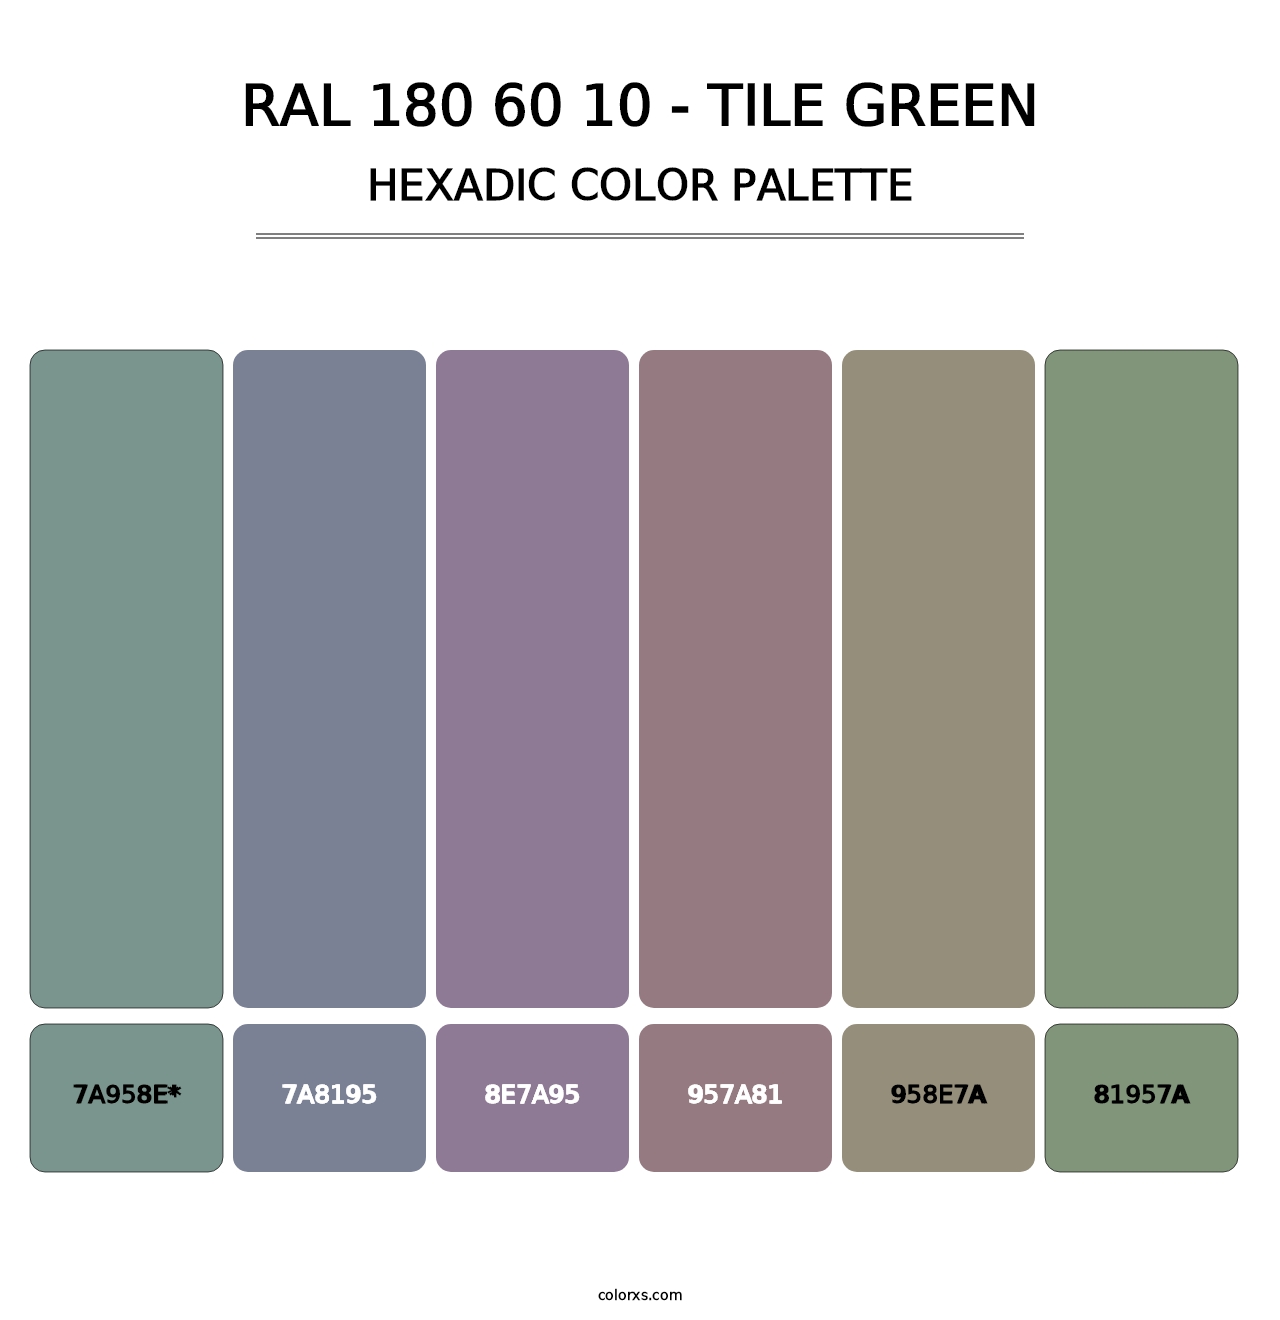 RAL 180 60 10 - Tile Green - Hexadic Color Palette